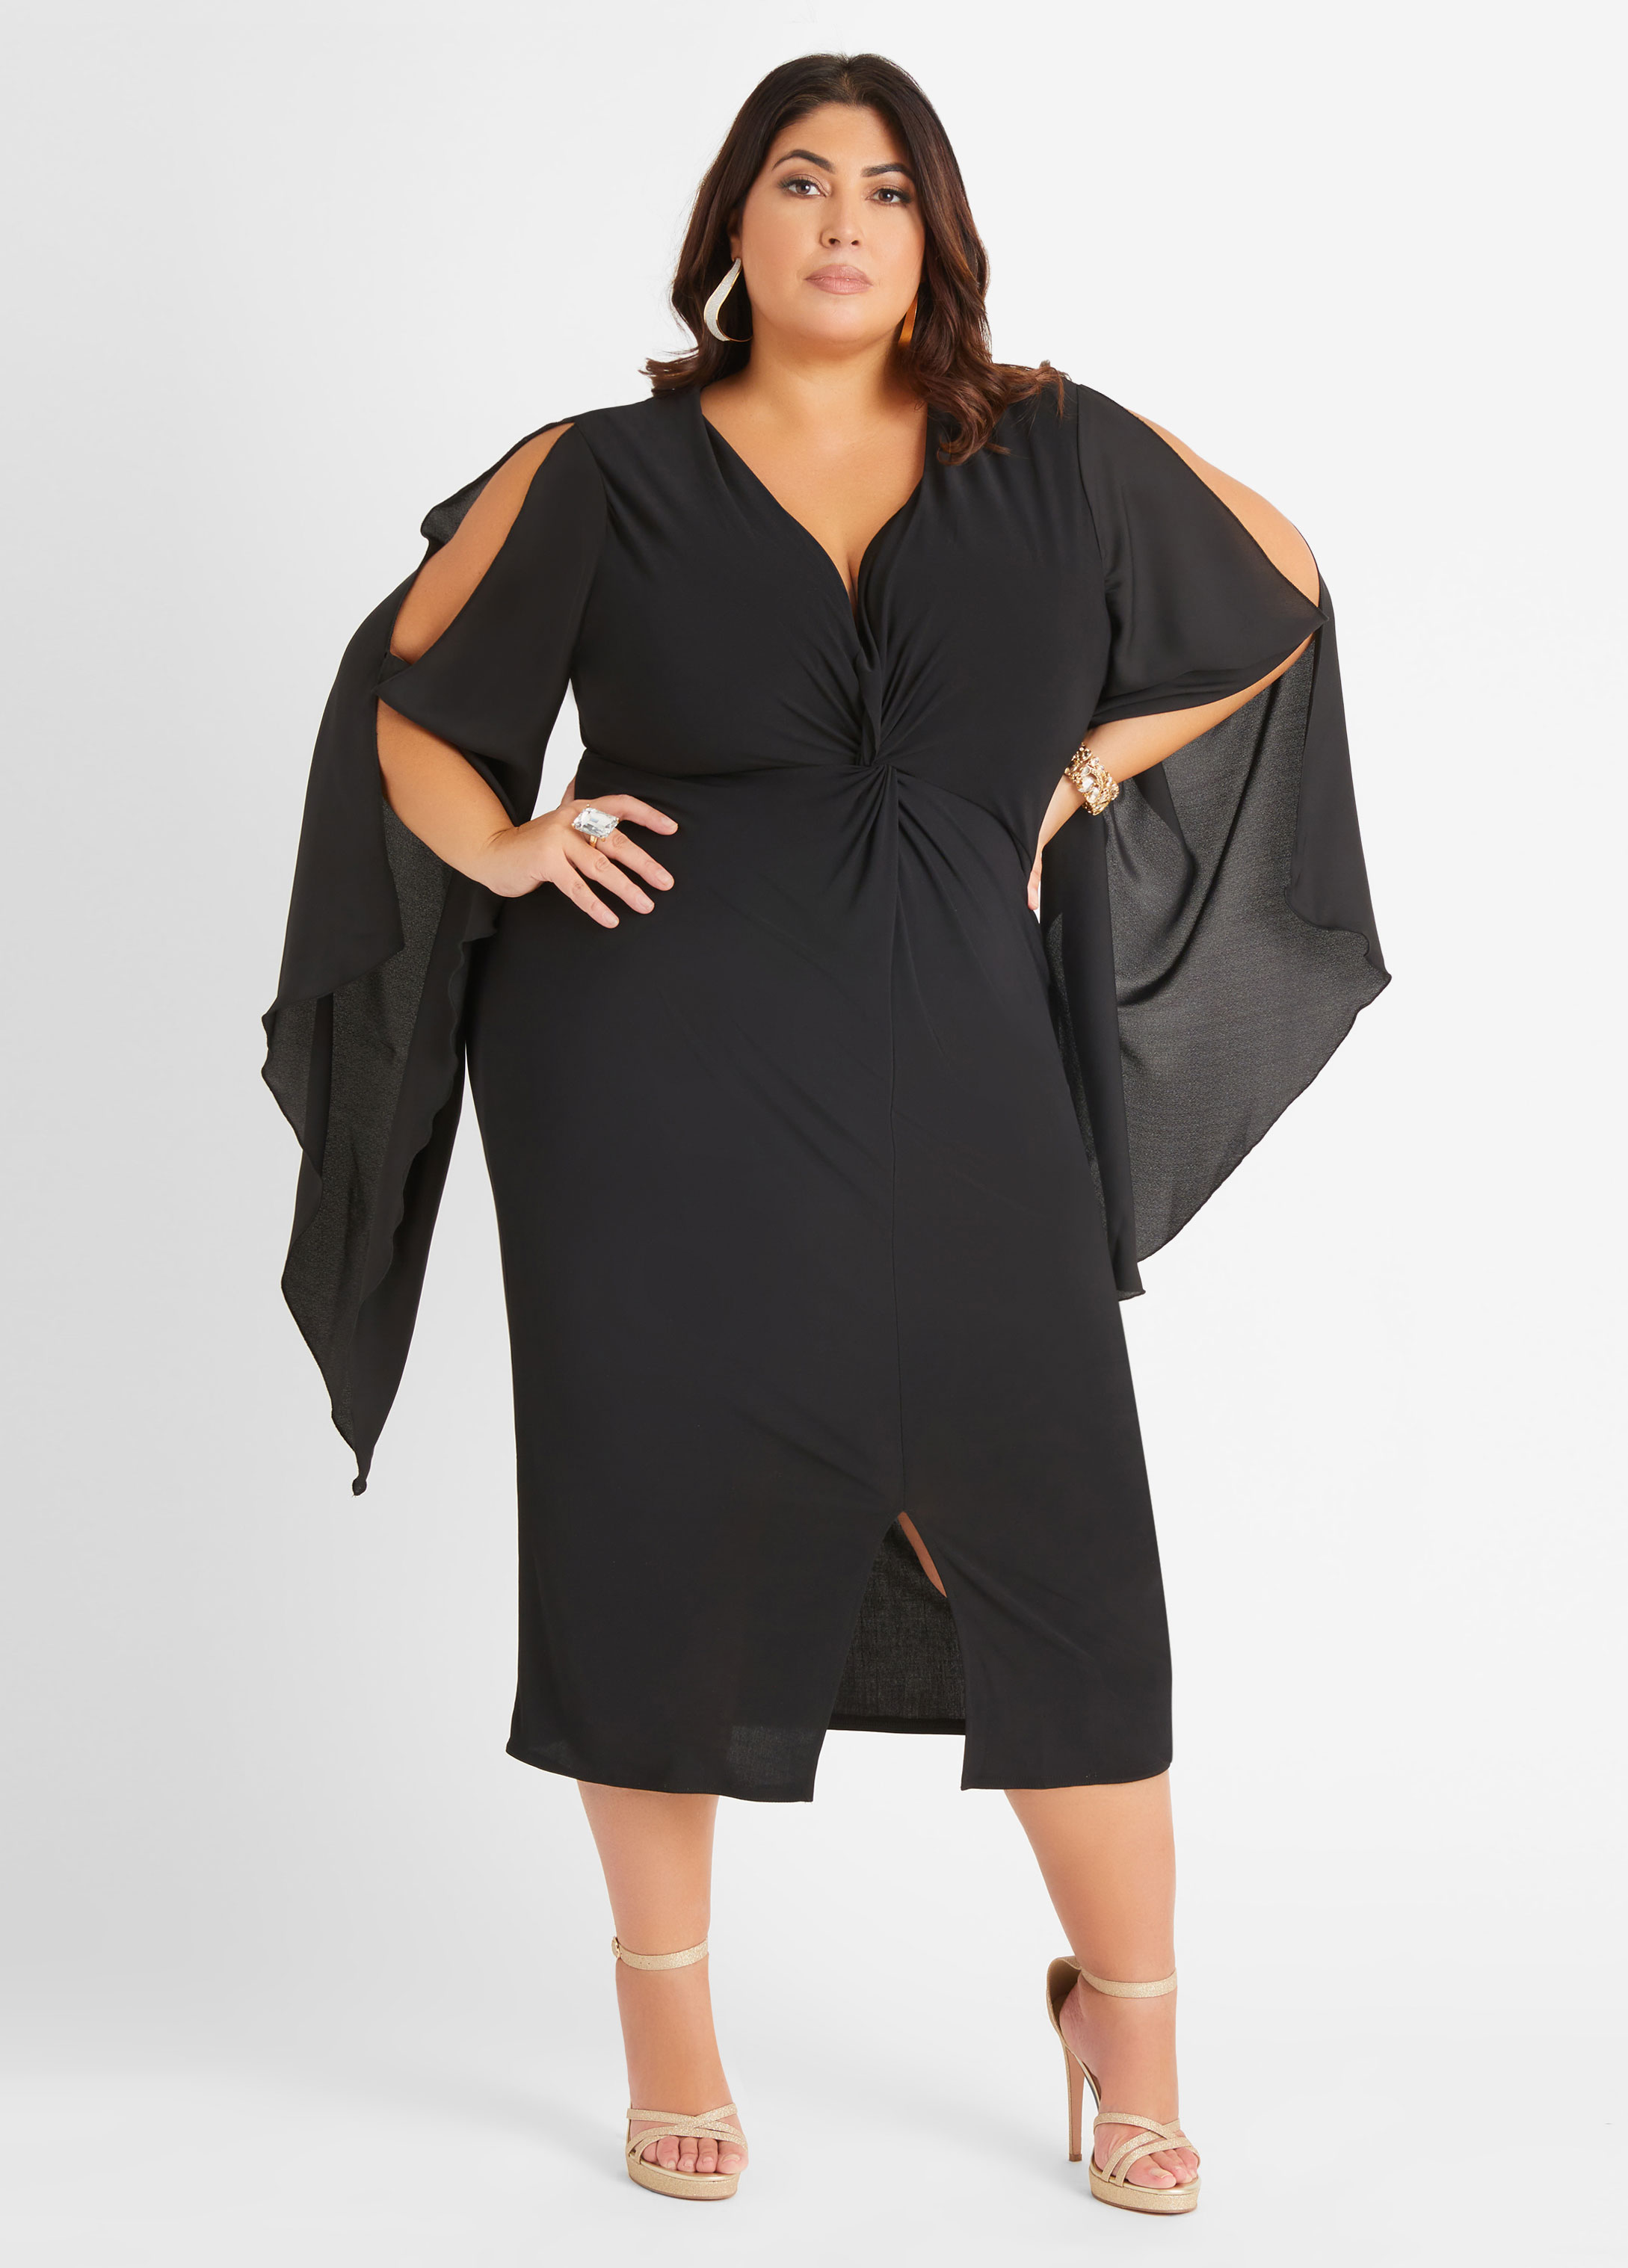 Plus Size Stretch Knit Drama Sleeve Dress, BLACK, 14/16 - Ashley Stewart